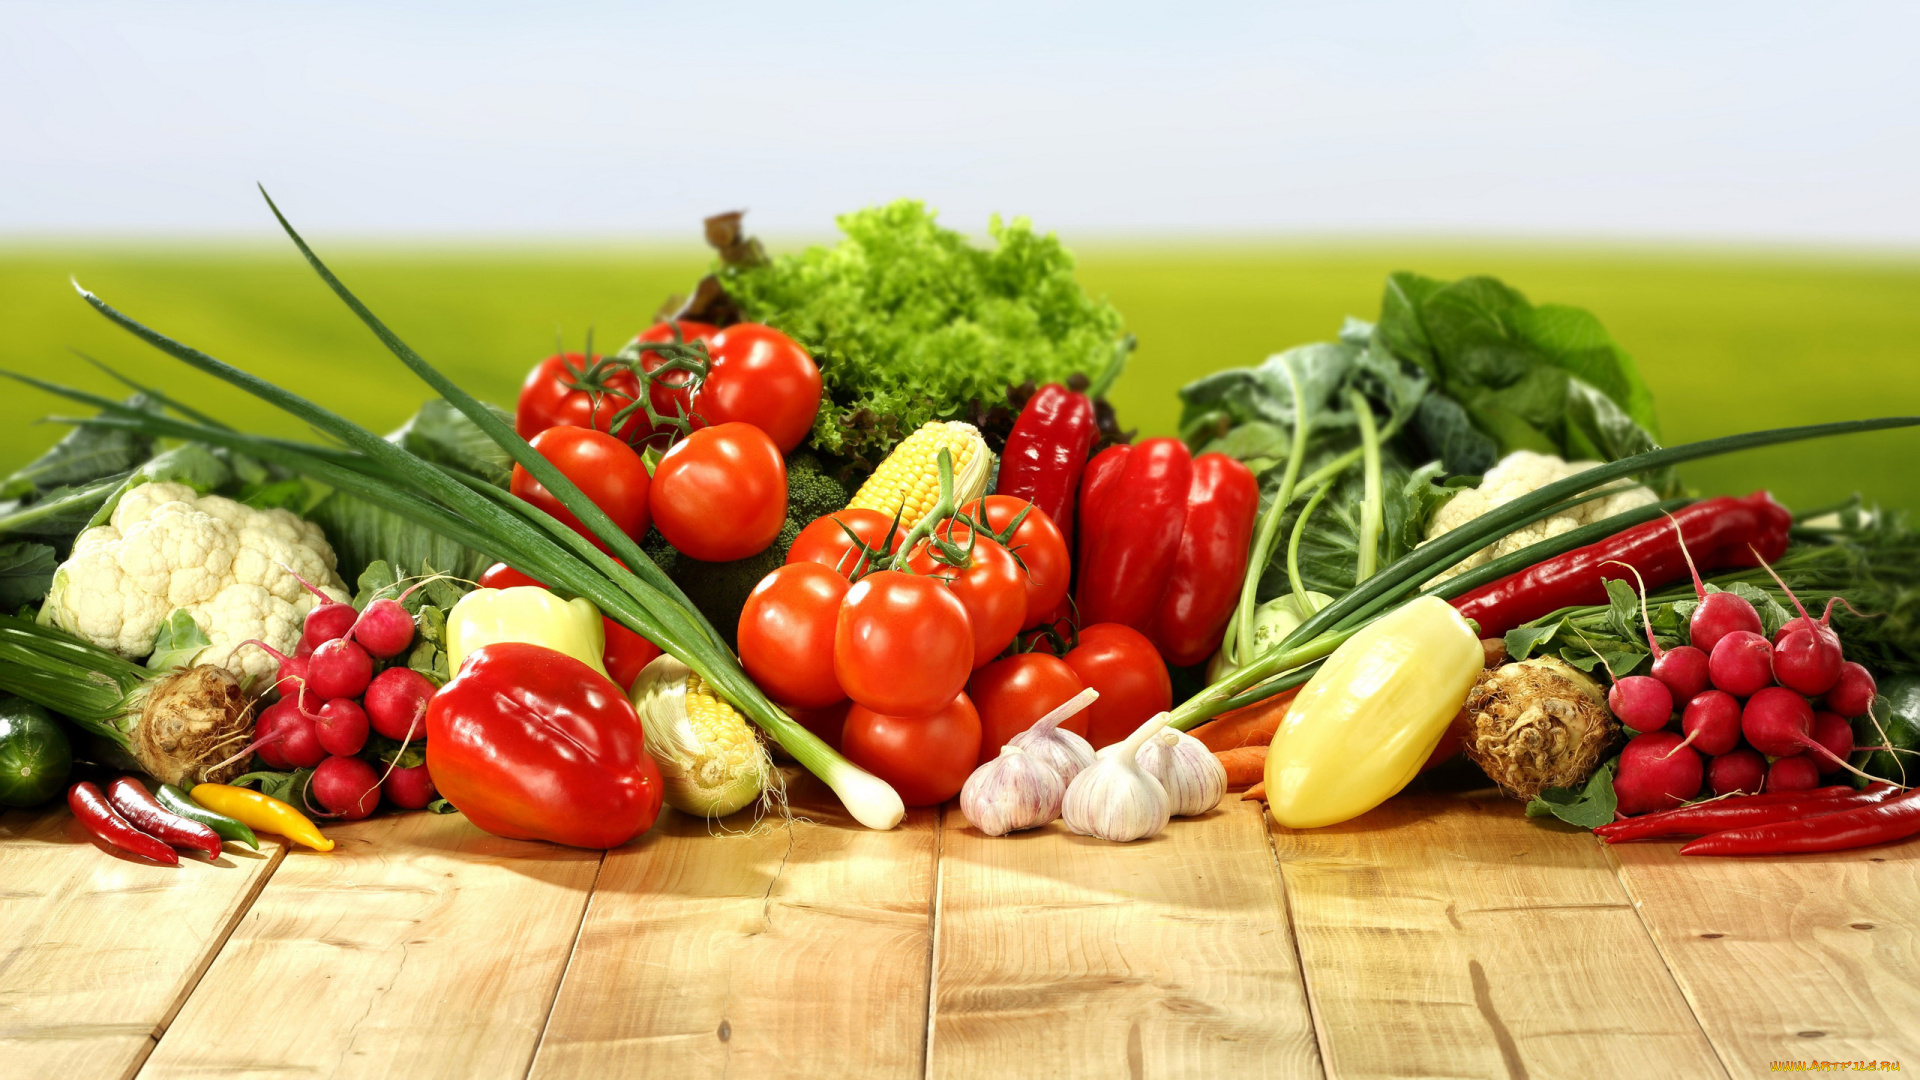 еда, овощи, перец, кукуруза, редис, кольраби, капуста, помидоры, лук, томаты